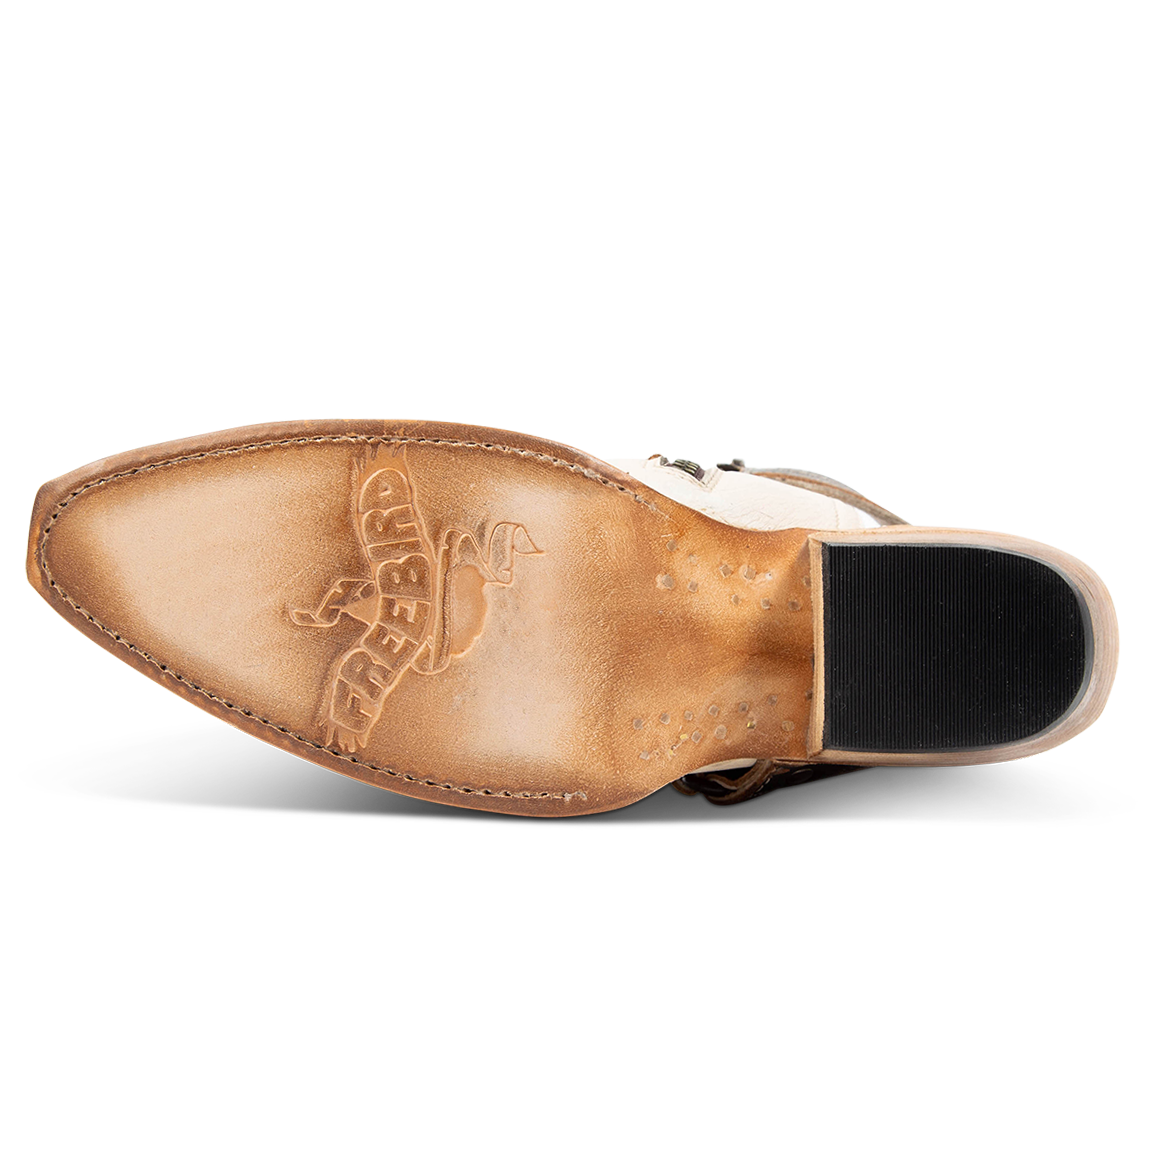 Leather sole imprinted with FREEBIRD on women's Waylon beige multi snip toe exposed heel shoe